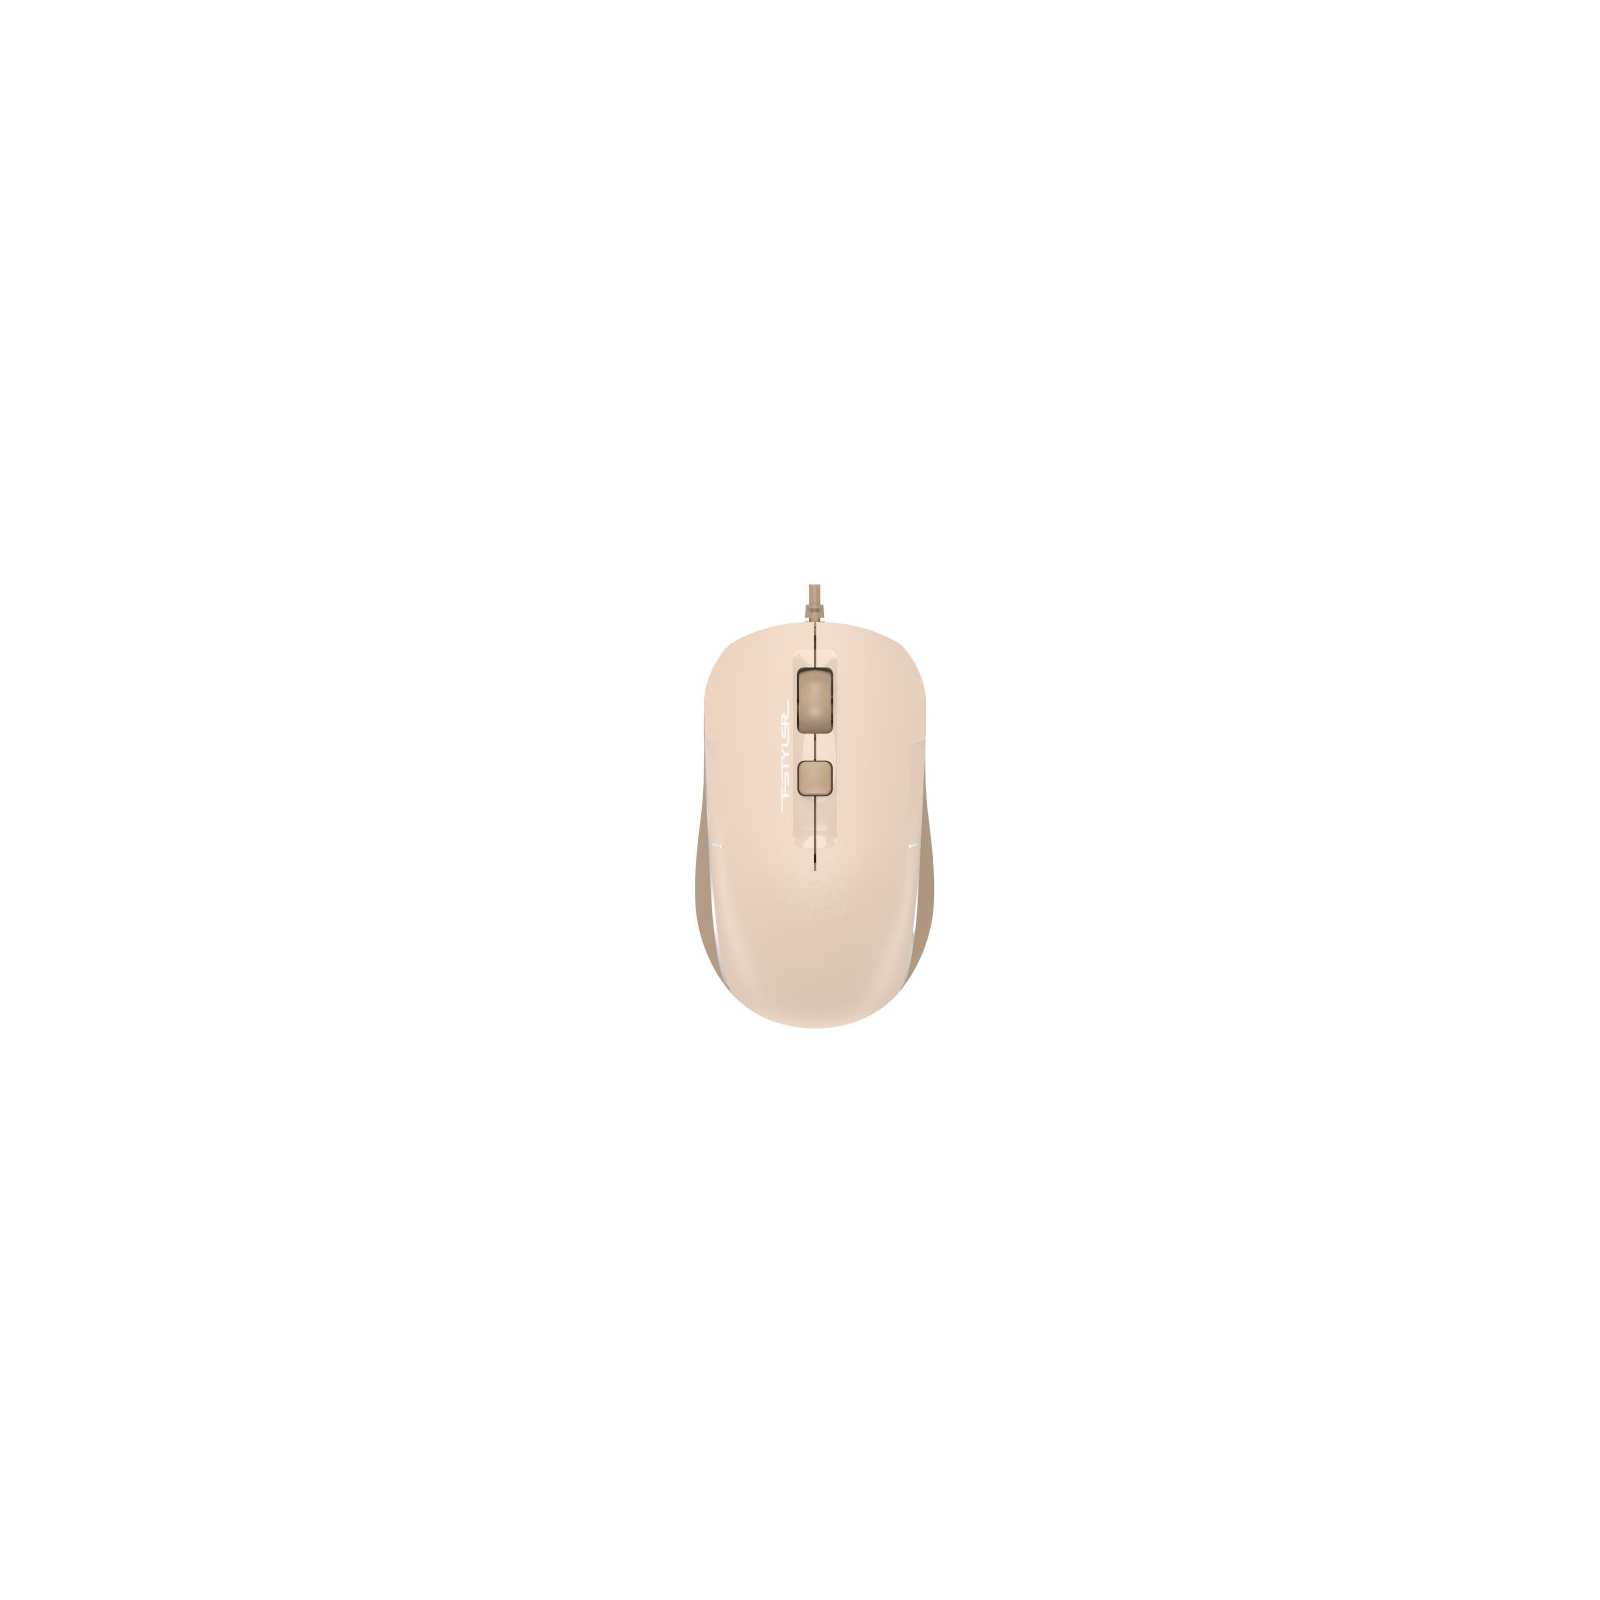 Мышка A4Tech FM26S USB Cafe Latte (4711421993494)